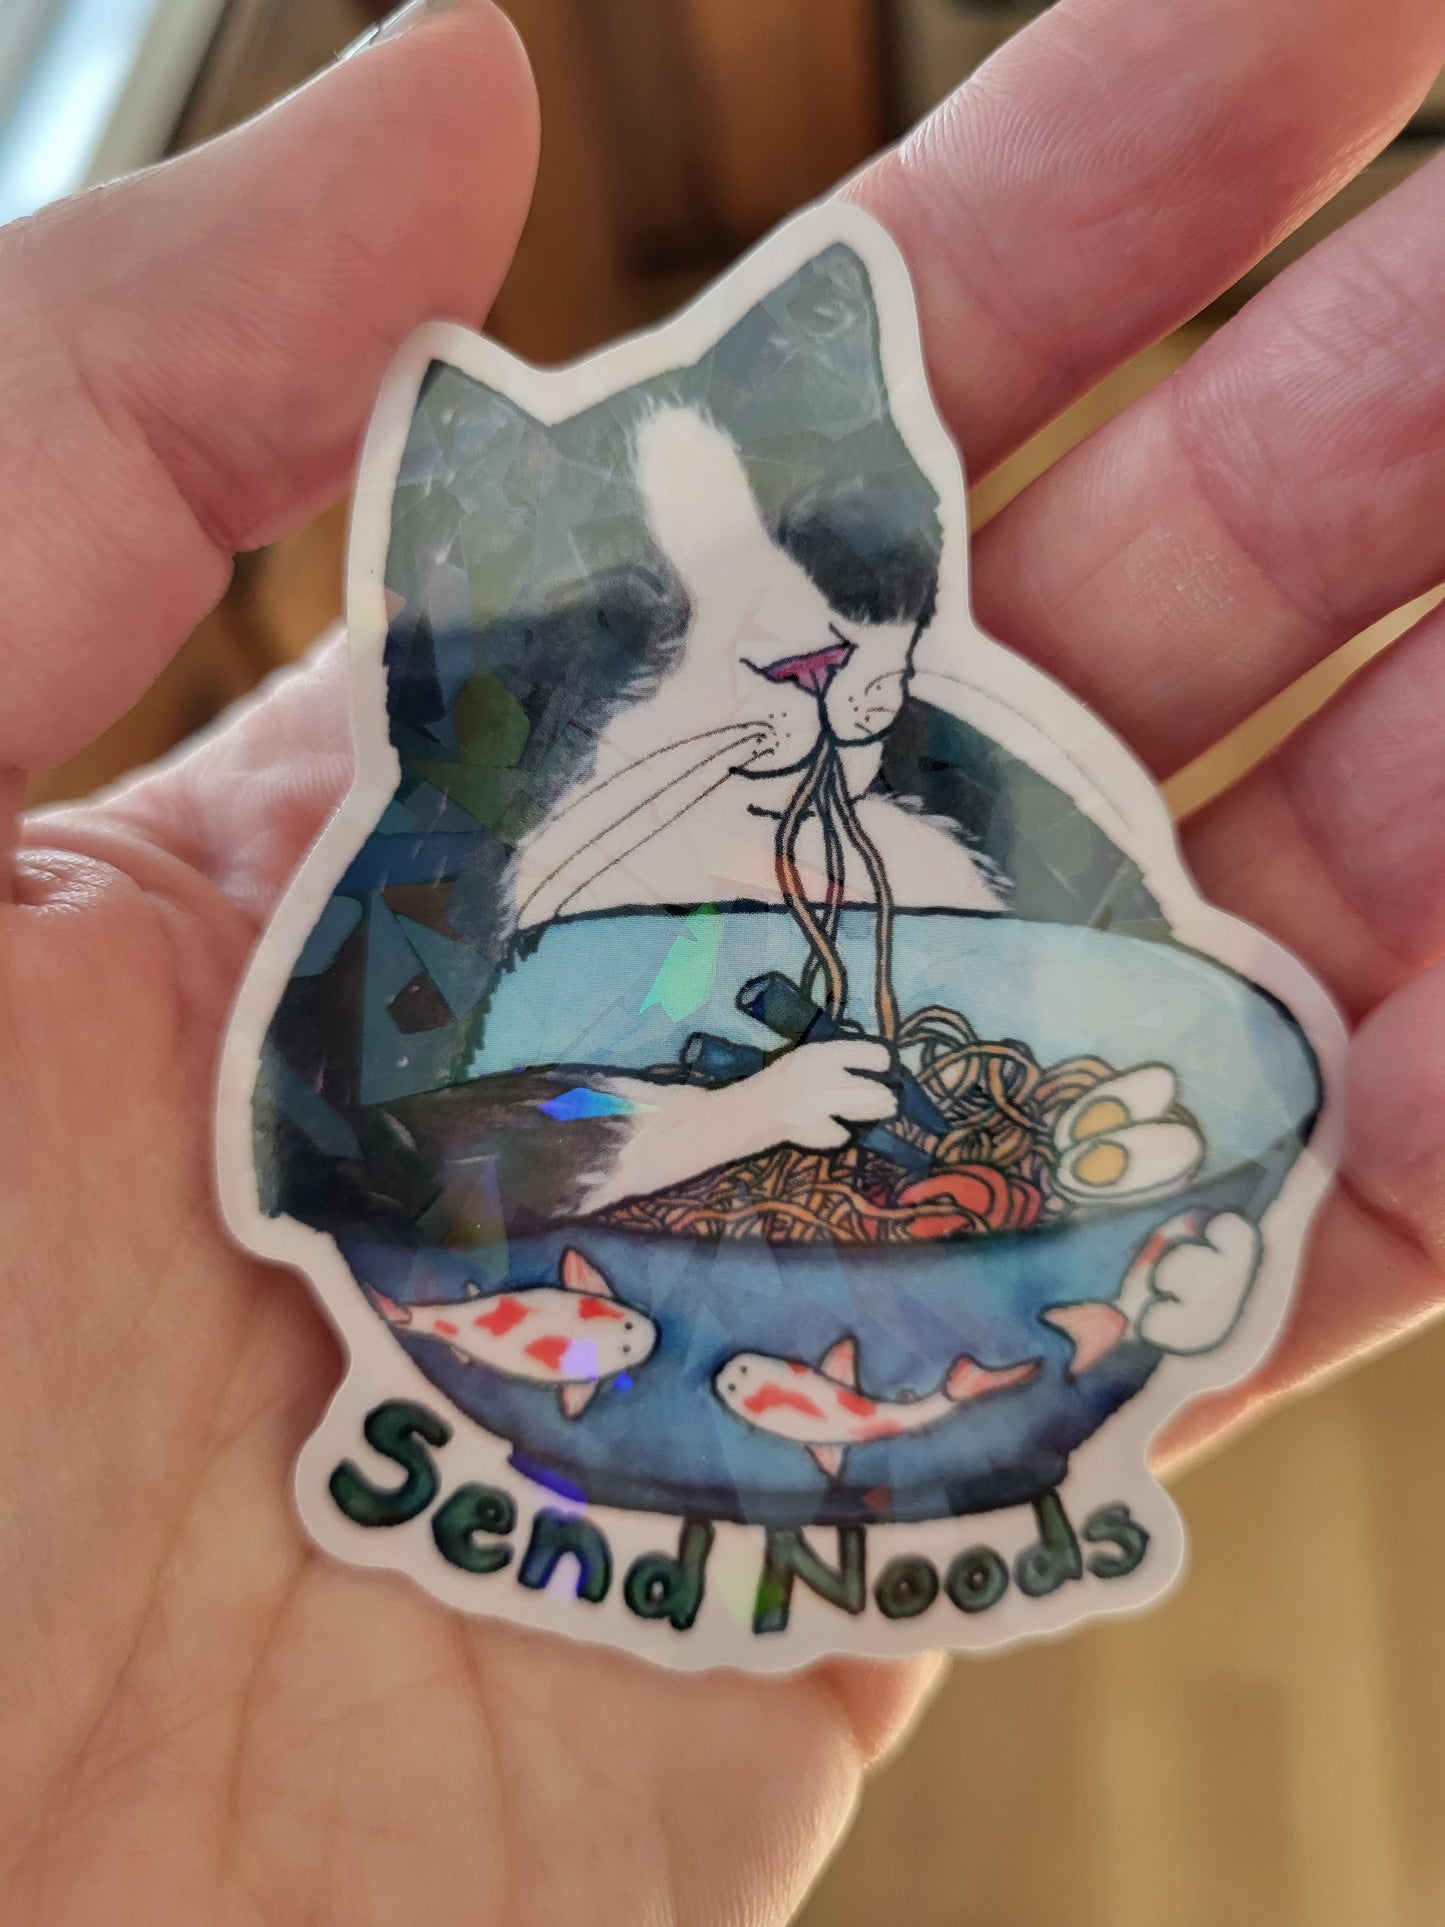 Send Noods Cat Vinyl Sticker